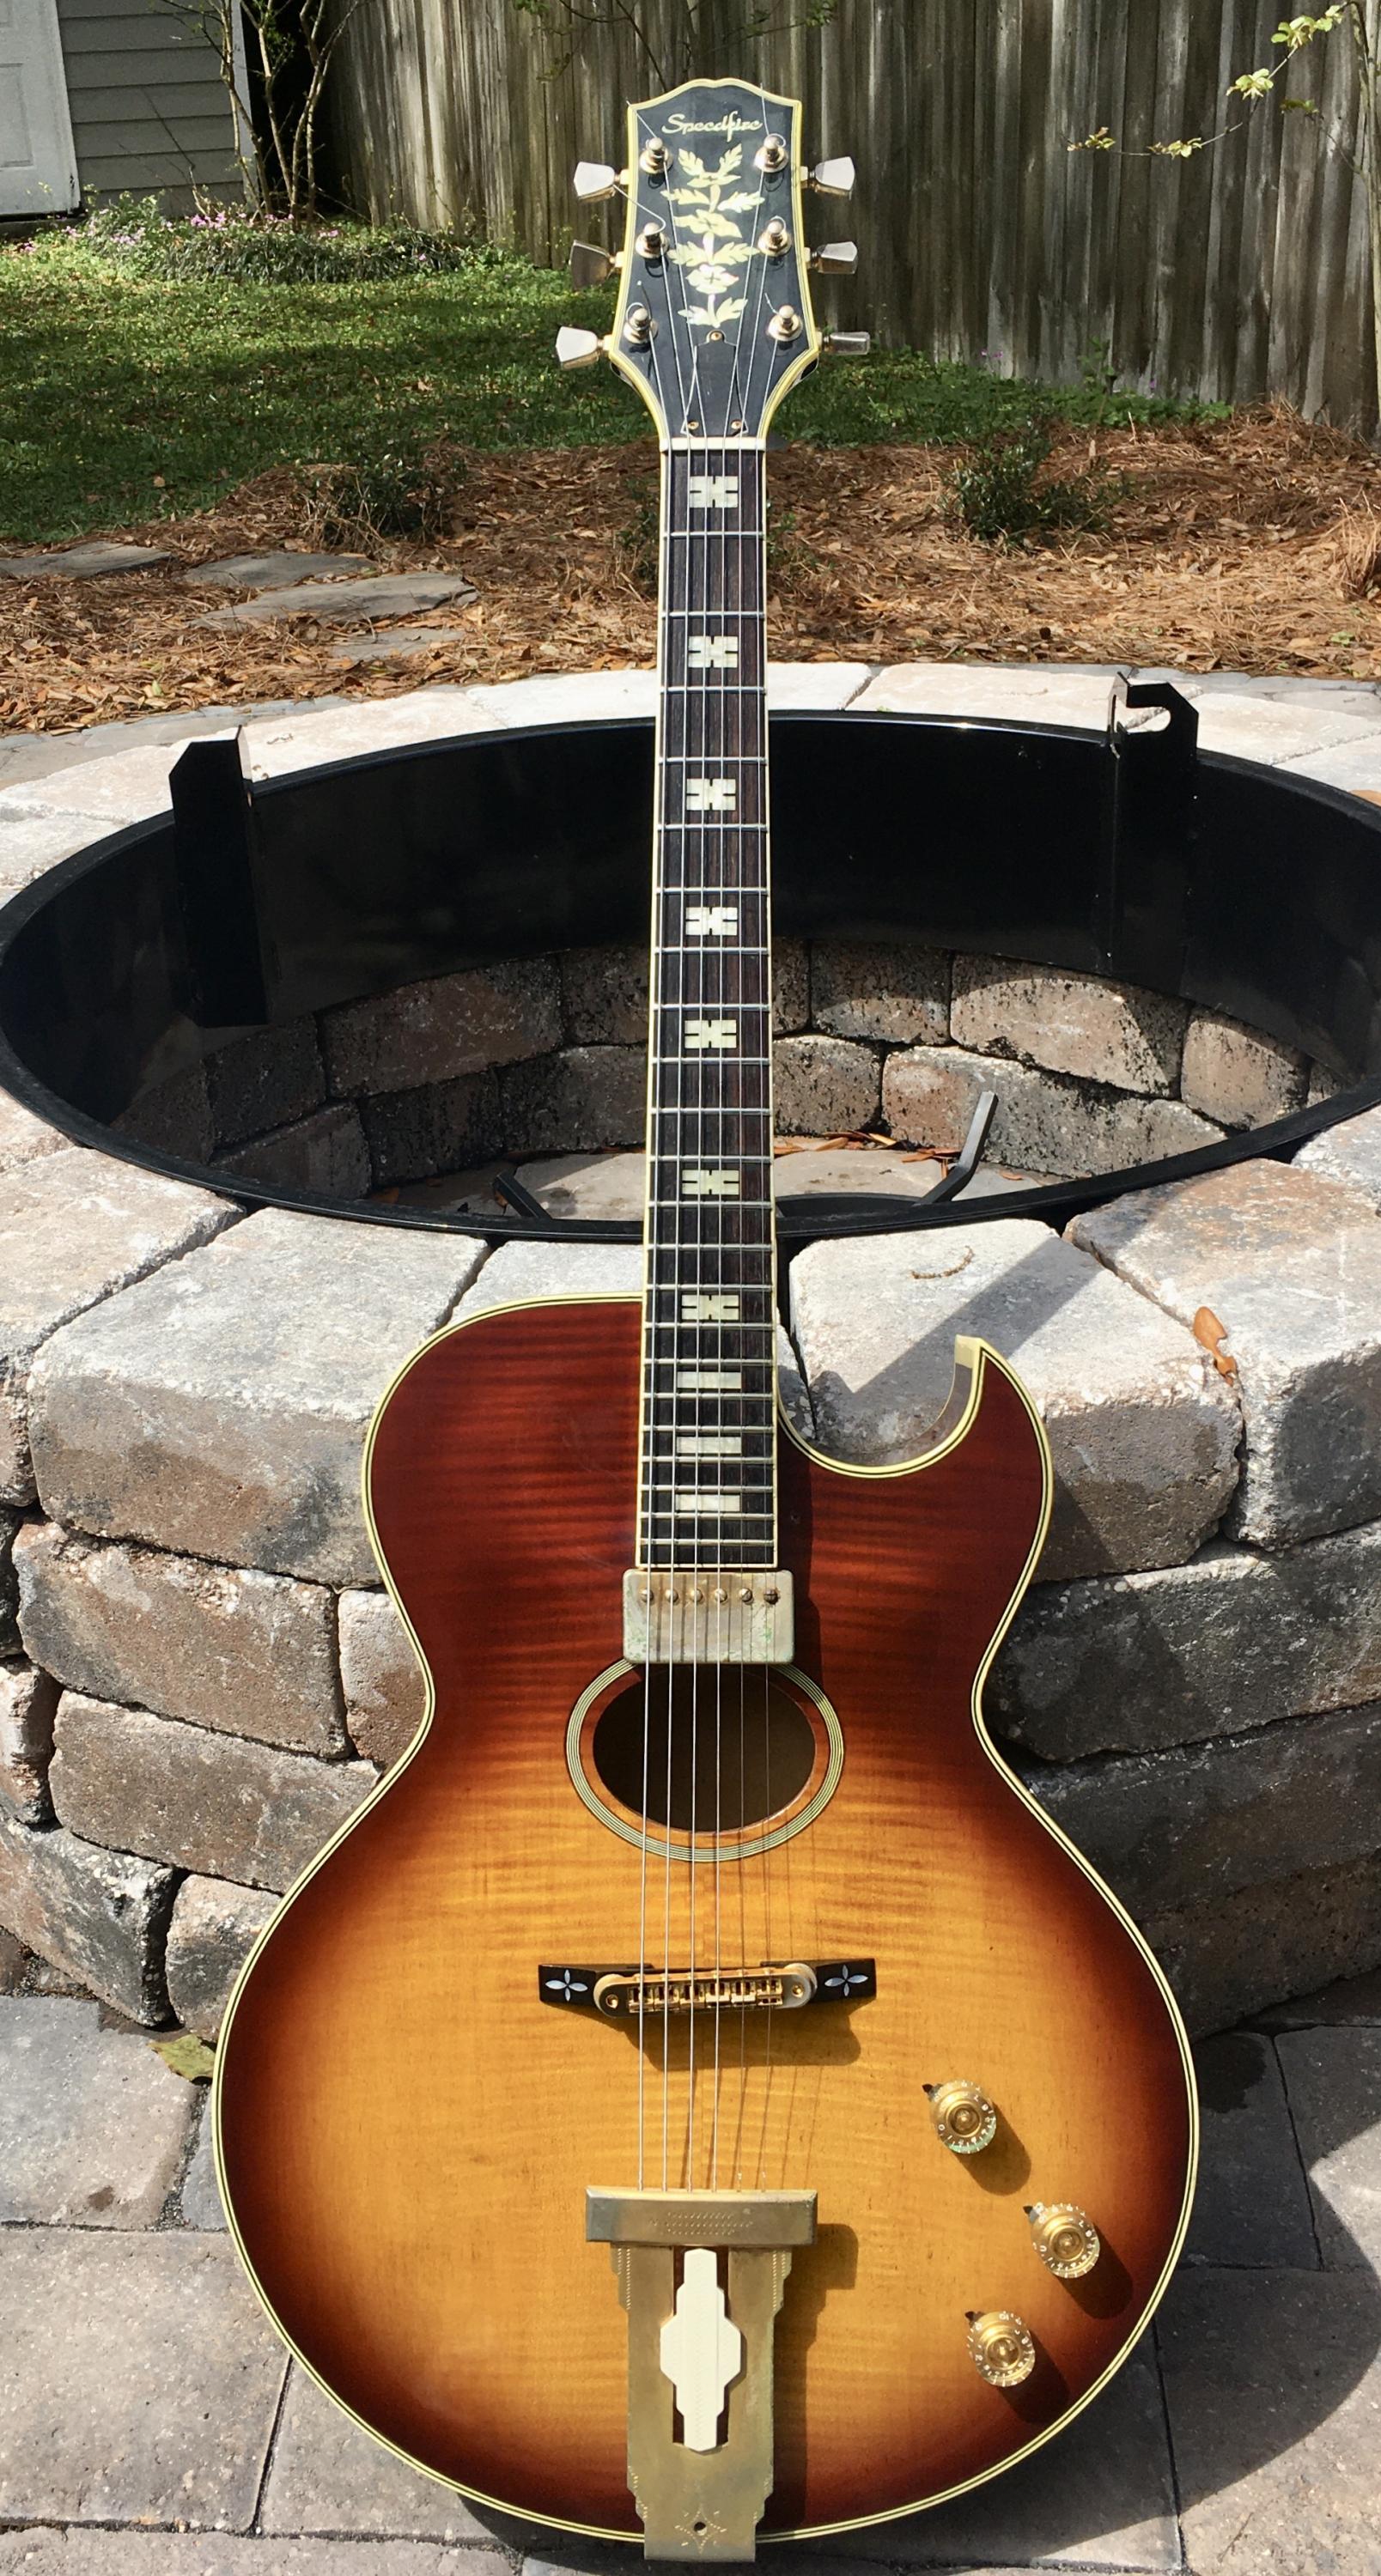 Japanese MANN Howard Roberts guitar (Ibanez 2453 ?)-26117a96-b863-4199-8b10-df4ecf9c65ff-jpg